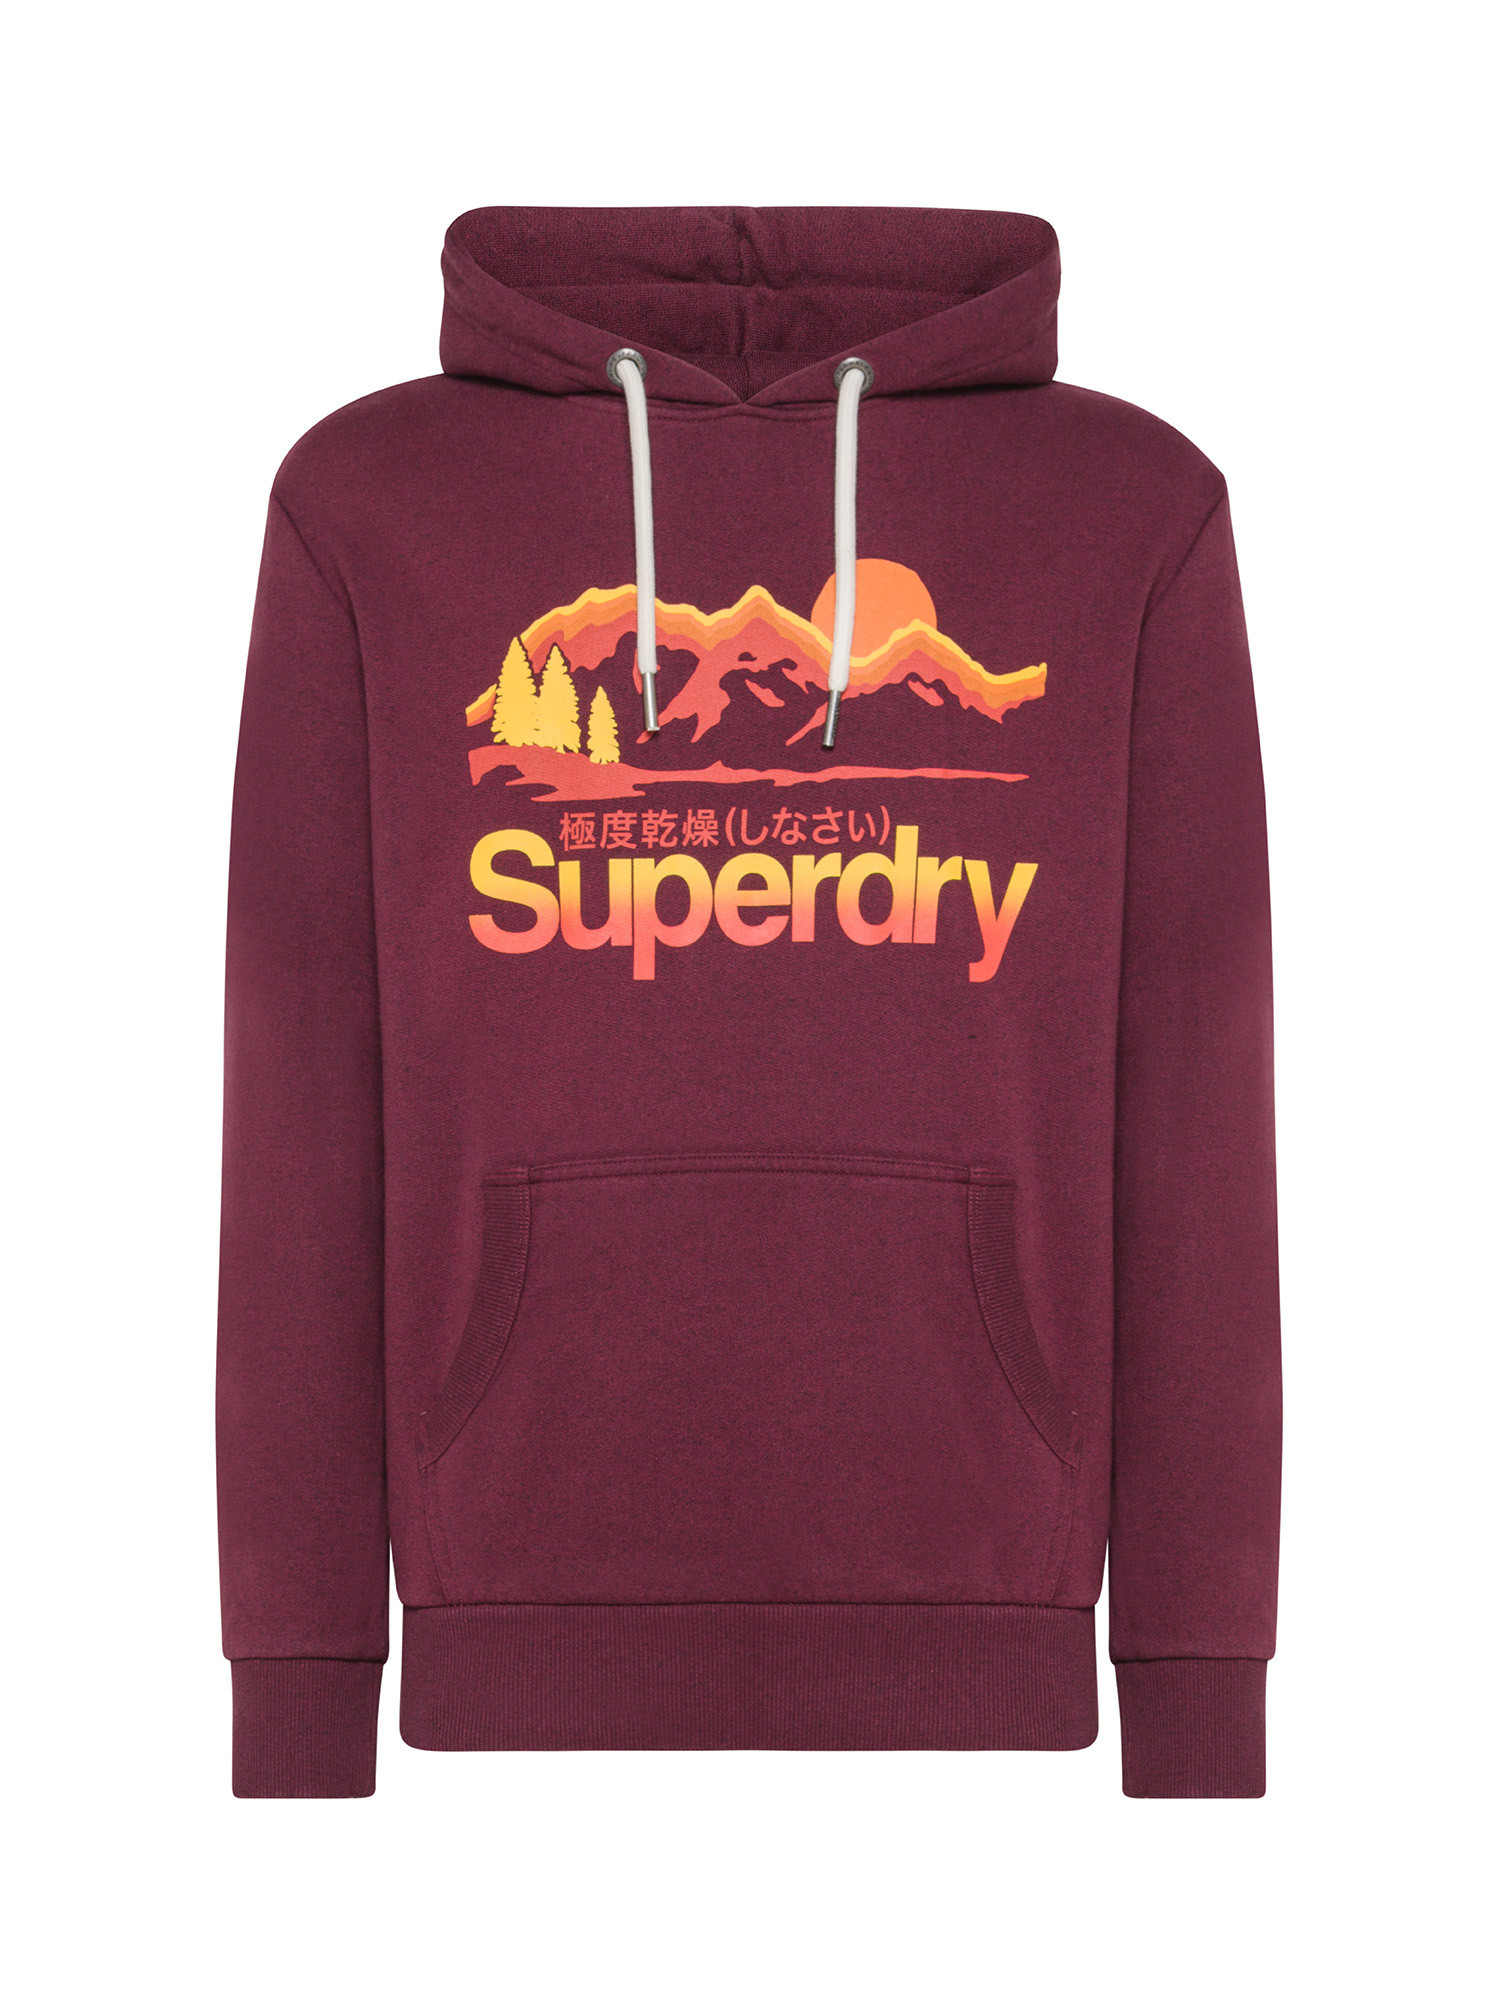 Superdry - Felpa con cappuccio e logo, Rosso bordeaux, large image number 0